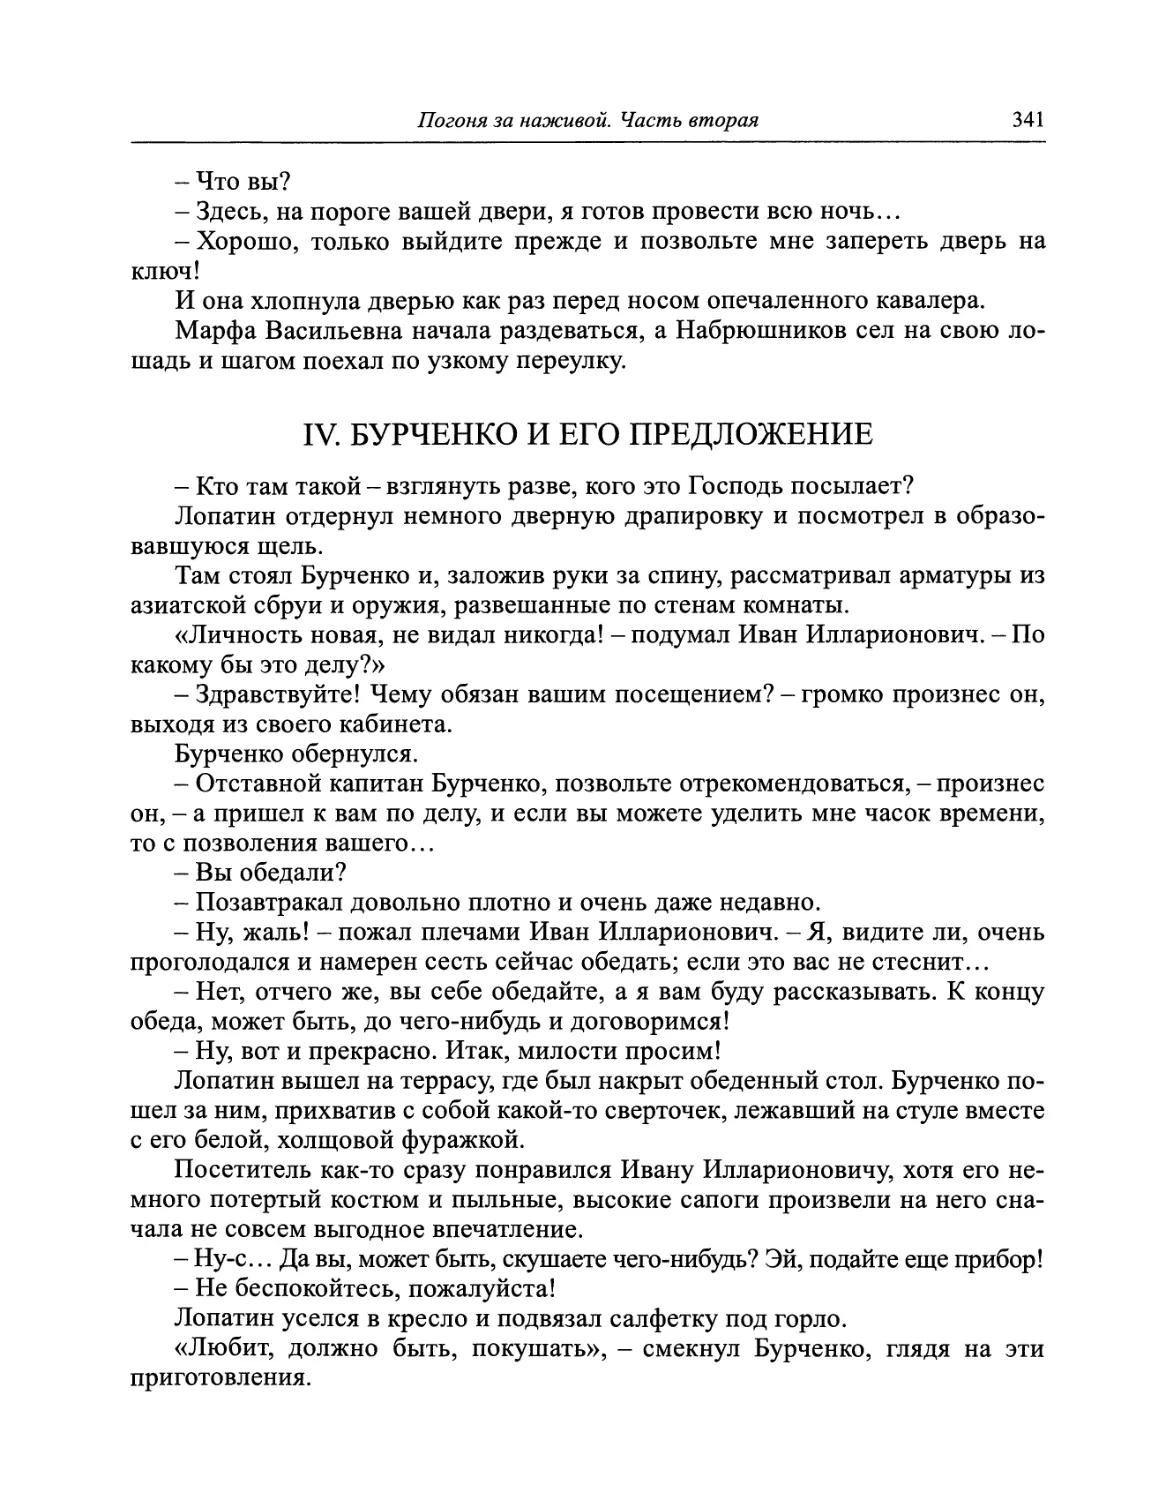 IV. Бурченко и его предложение